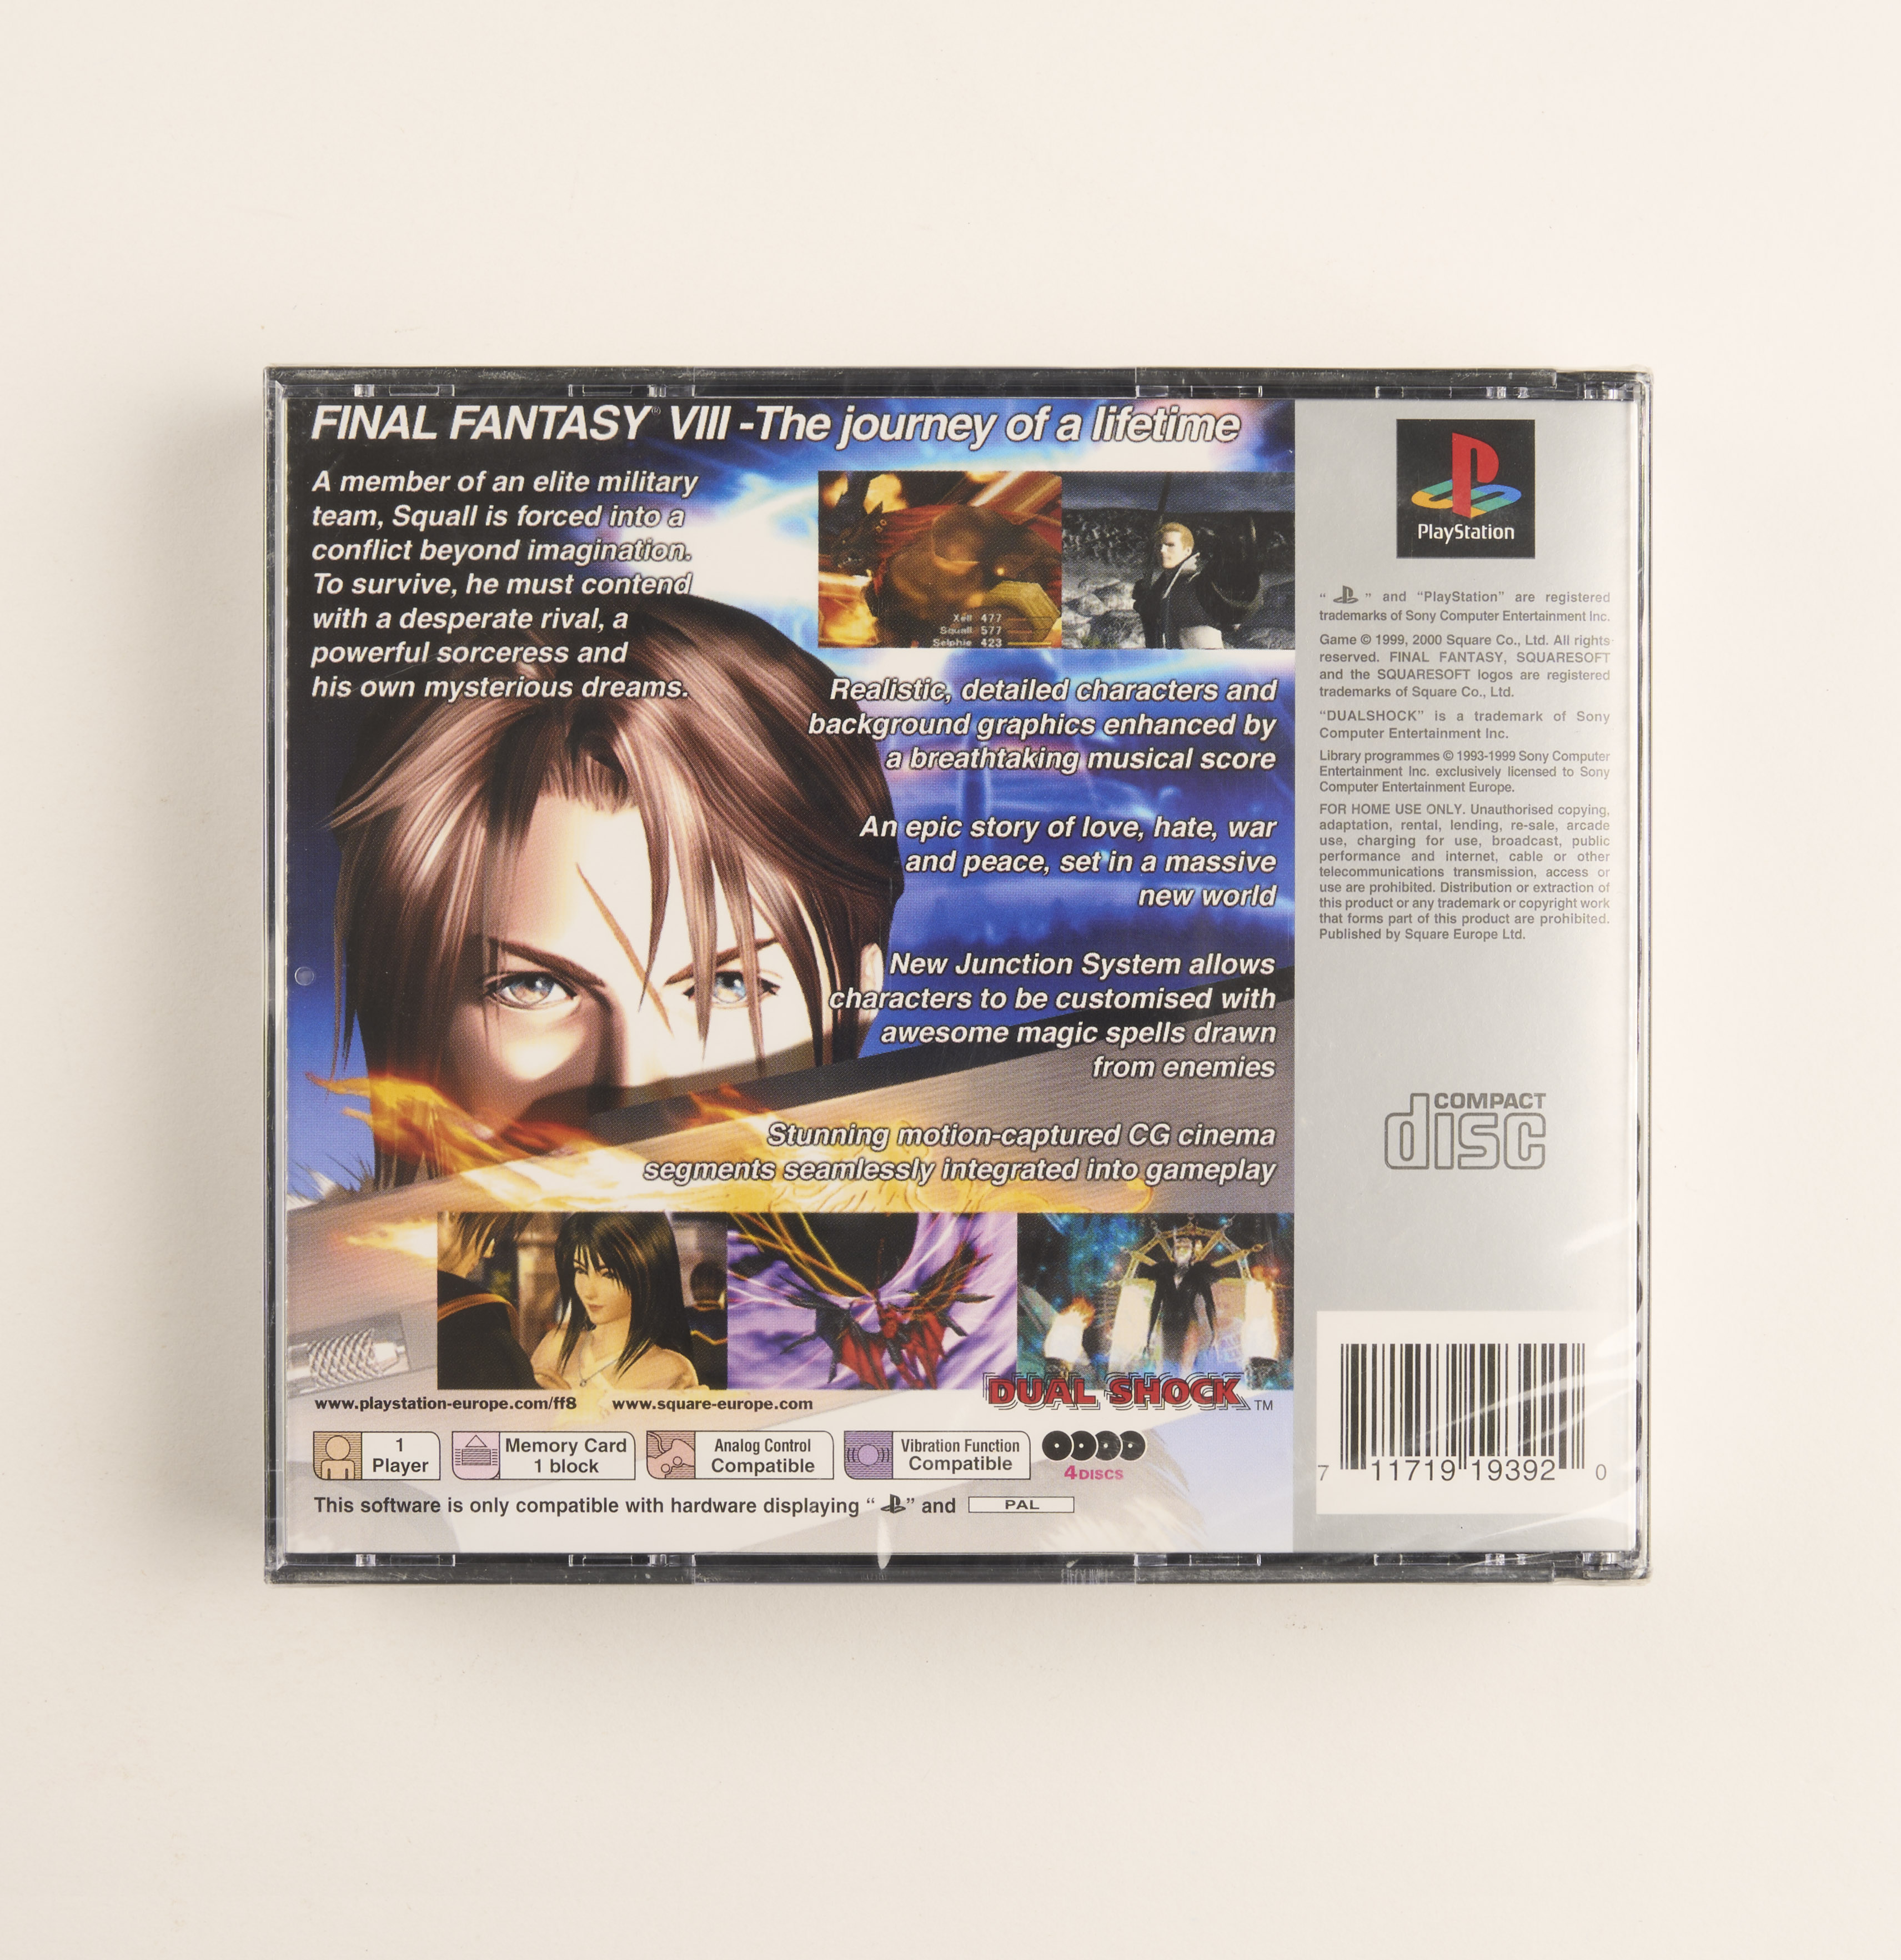 Sony - Final Fantasy 8 PAL - PlayStation - Sealed - Image 2 of 2